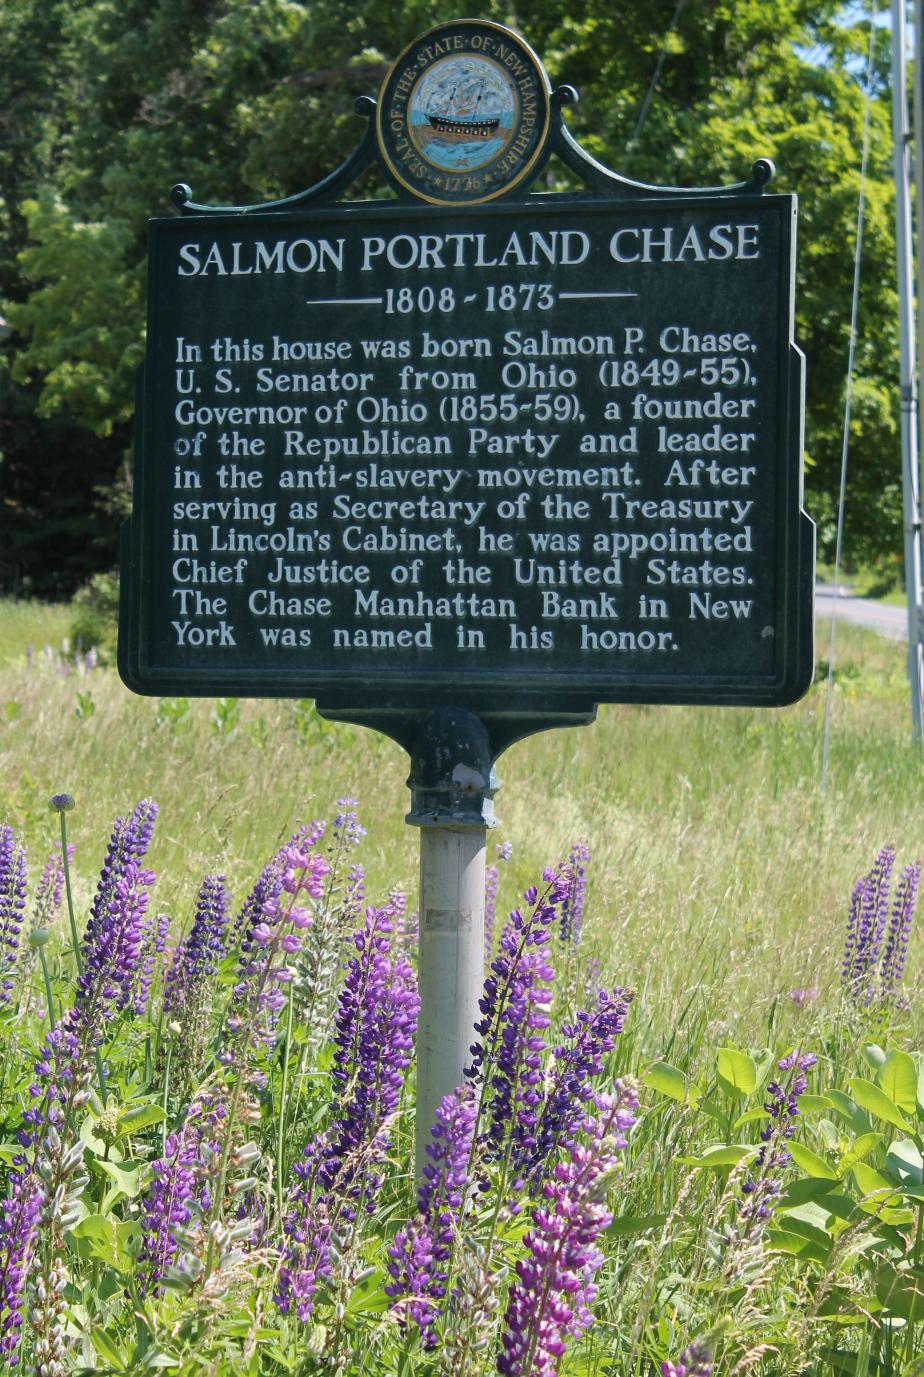 Salmon Portland Chase Historical Marker